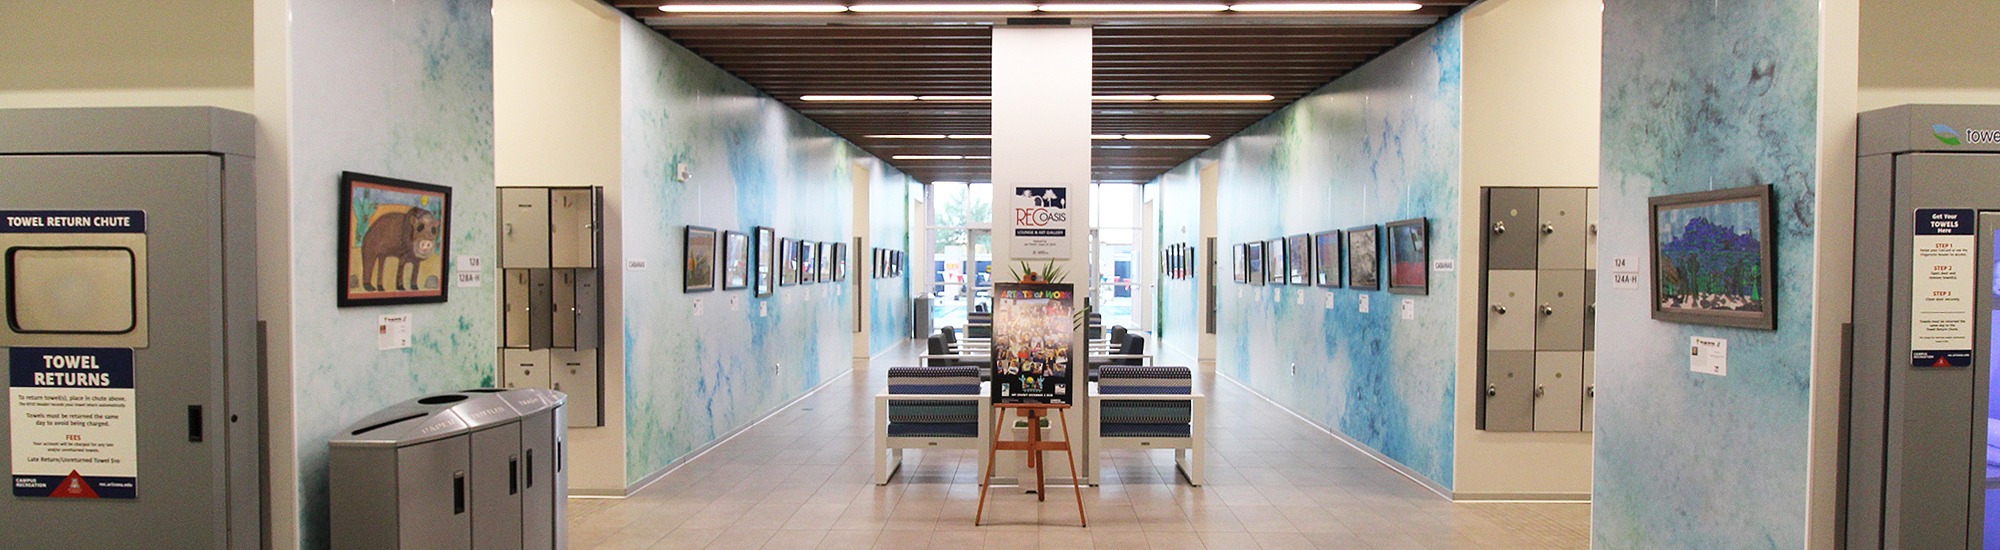 Oasis Lounge at Campus Rec UArizona filled with artwork